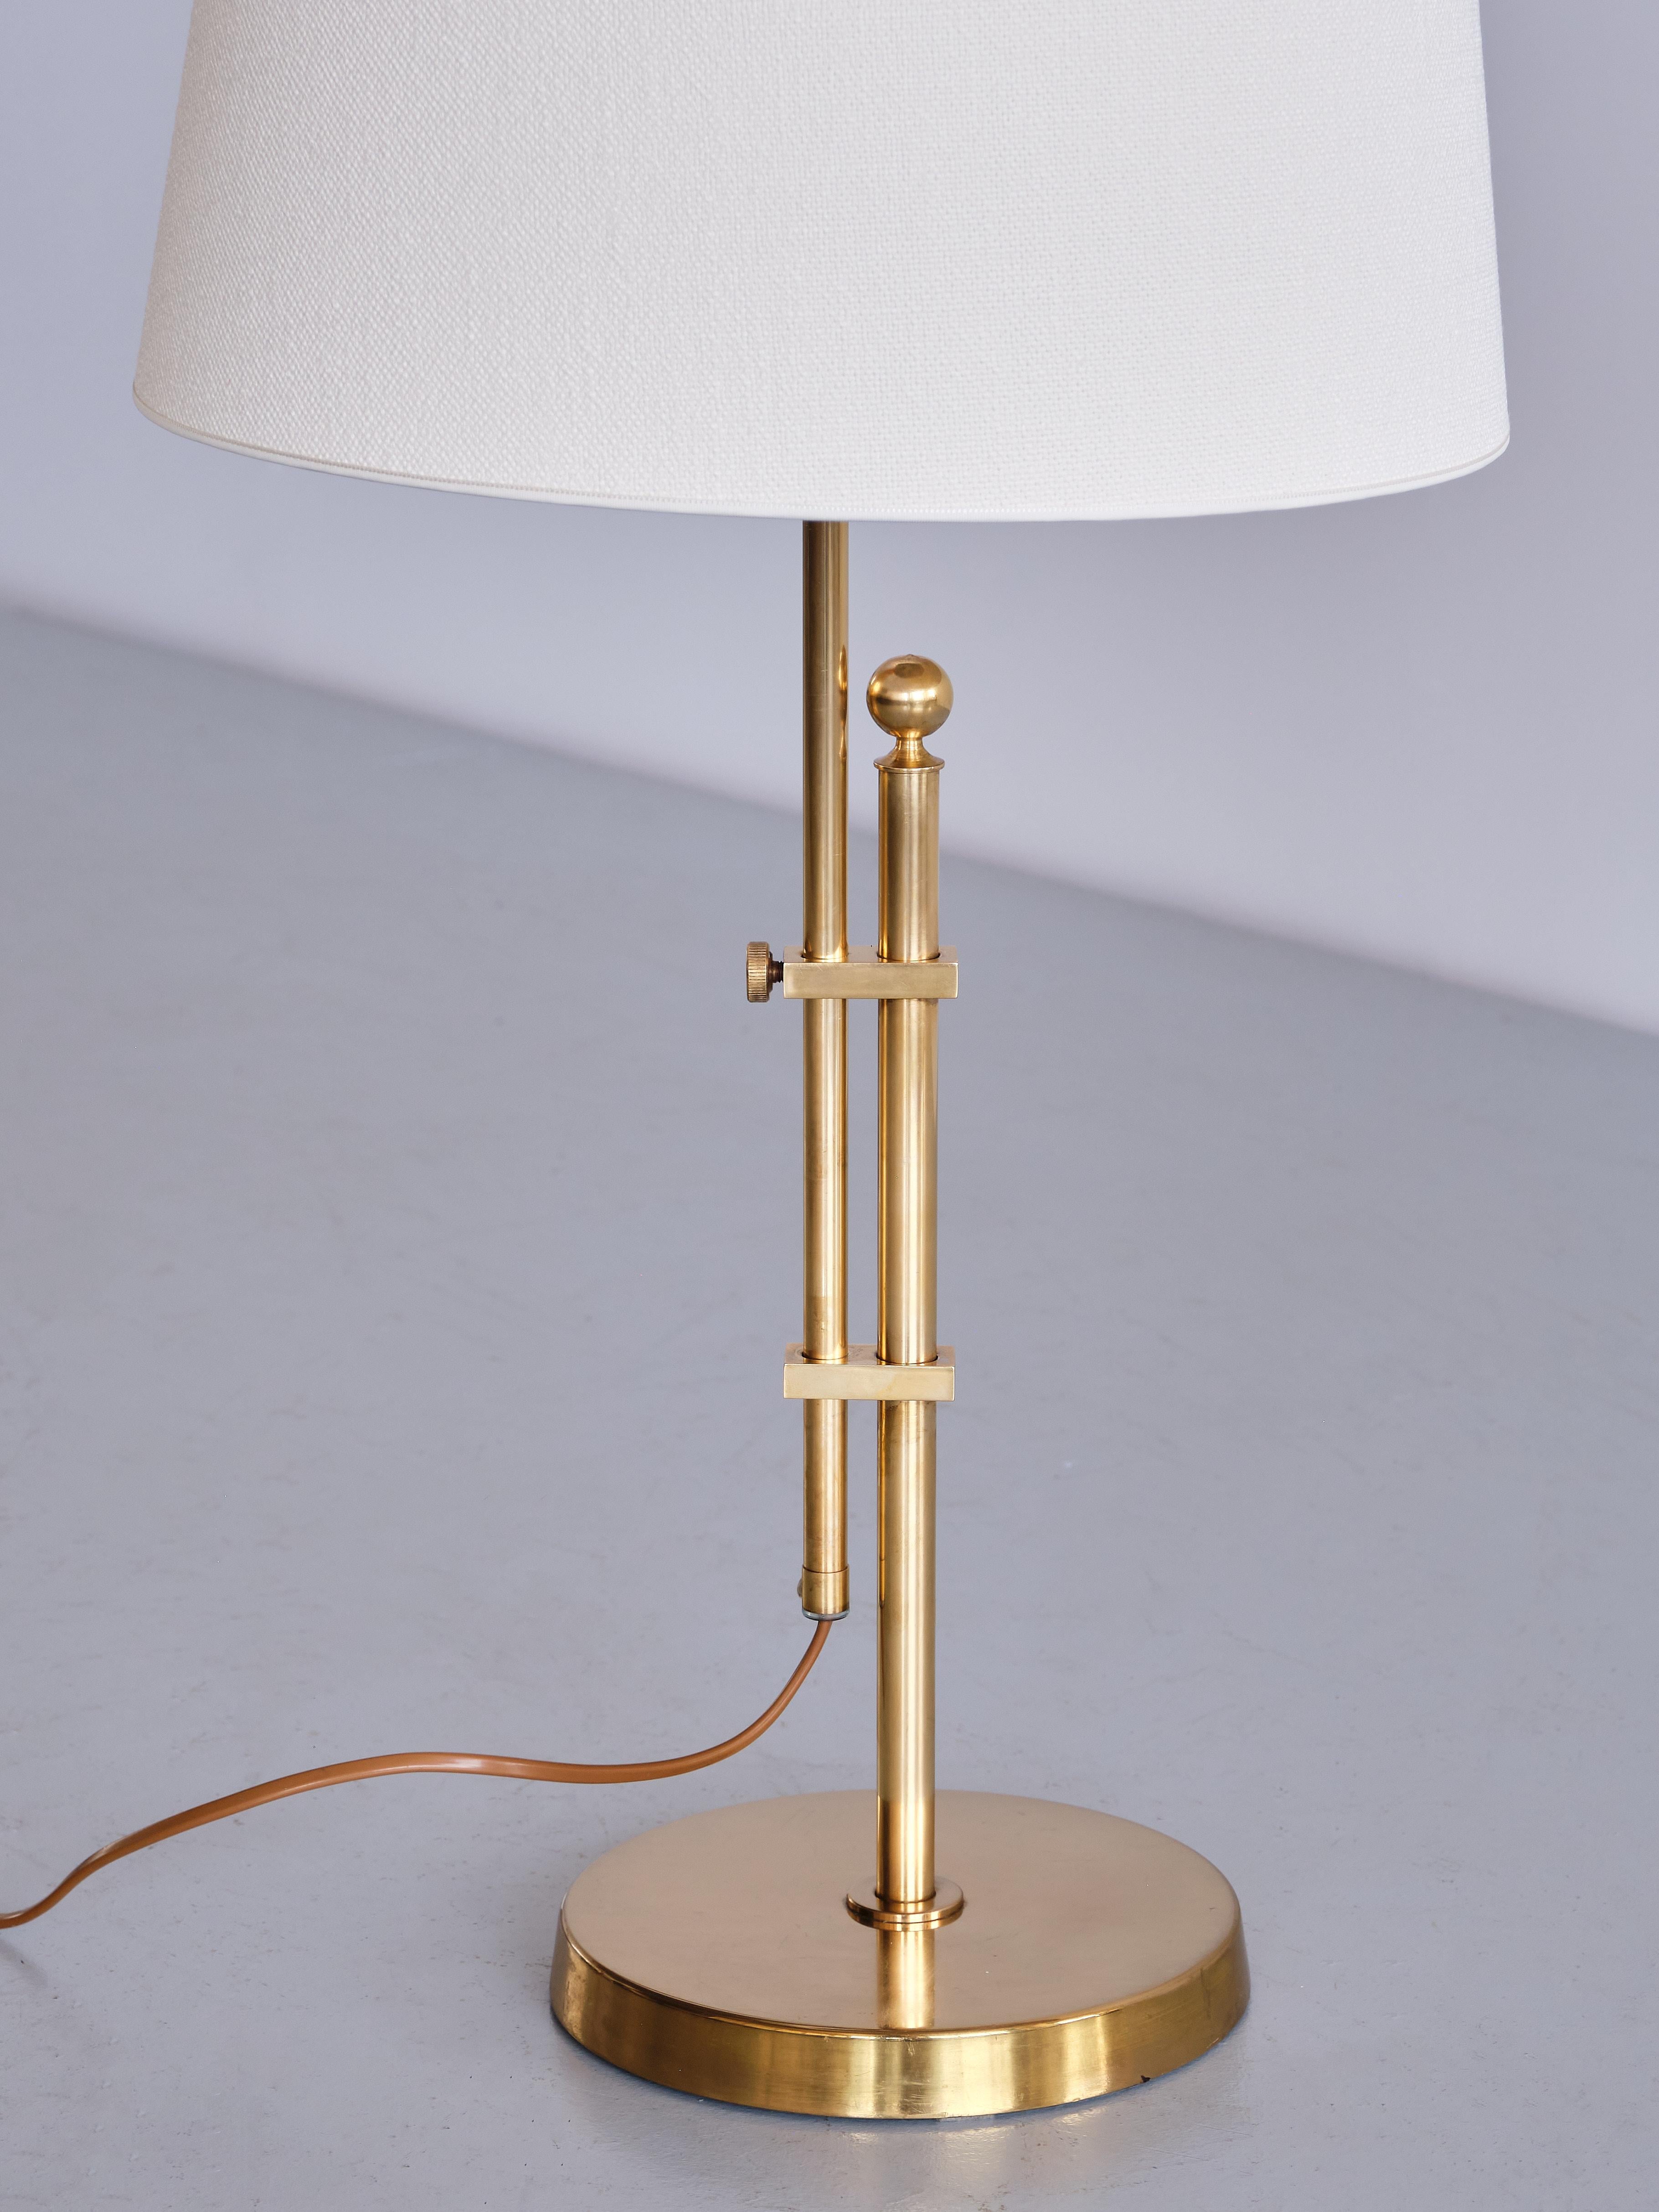 Scandinavian Modern Bergboms B-131 Height Adjustable Table Lamp in Brass, Sweden, 1950s For Sale